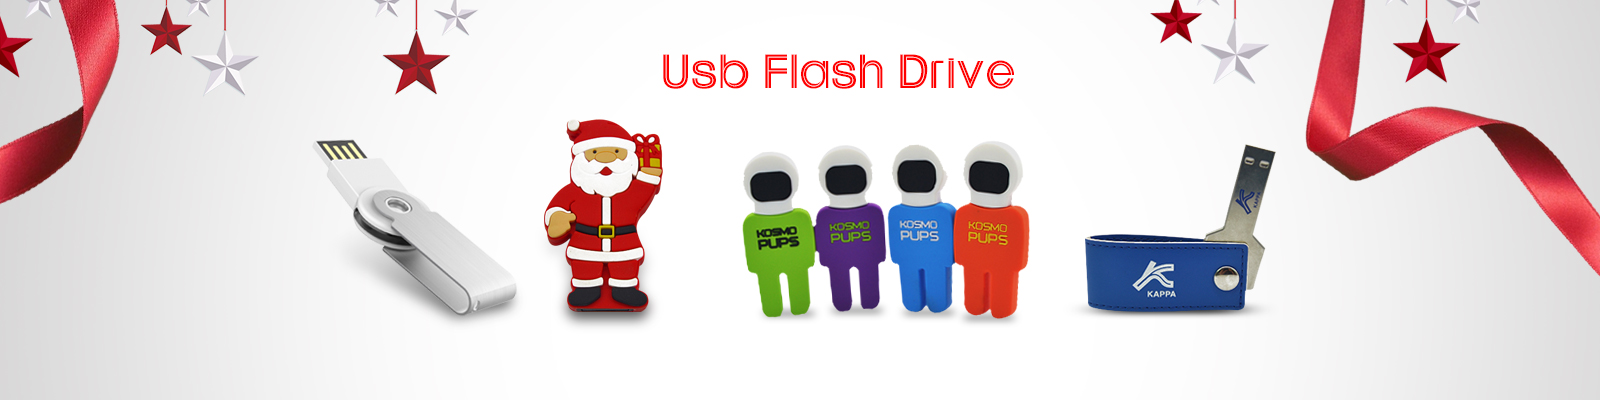 Custom usb drives | 1gb flash drive | Cute flash drives | leadway group limited